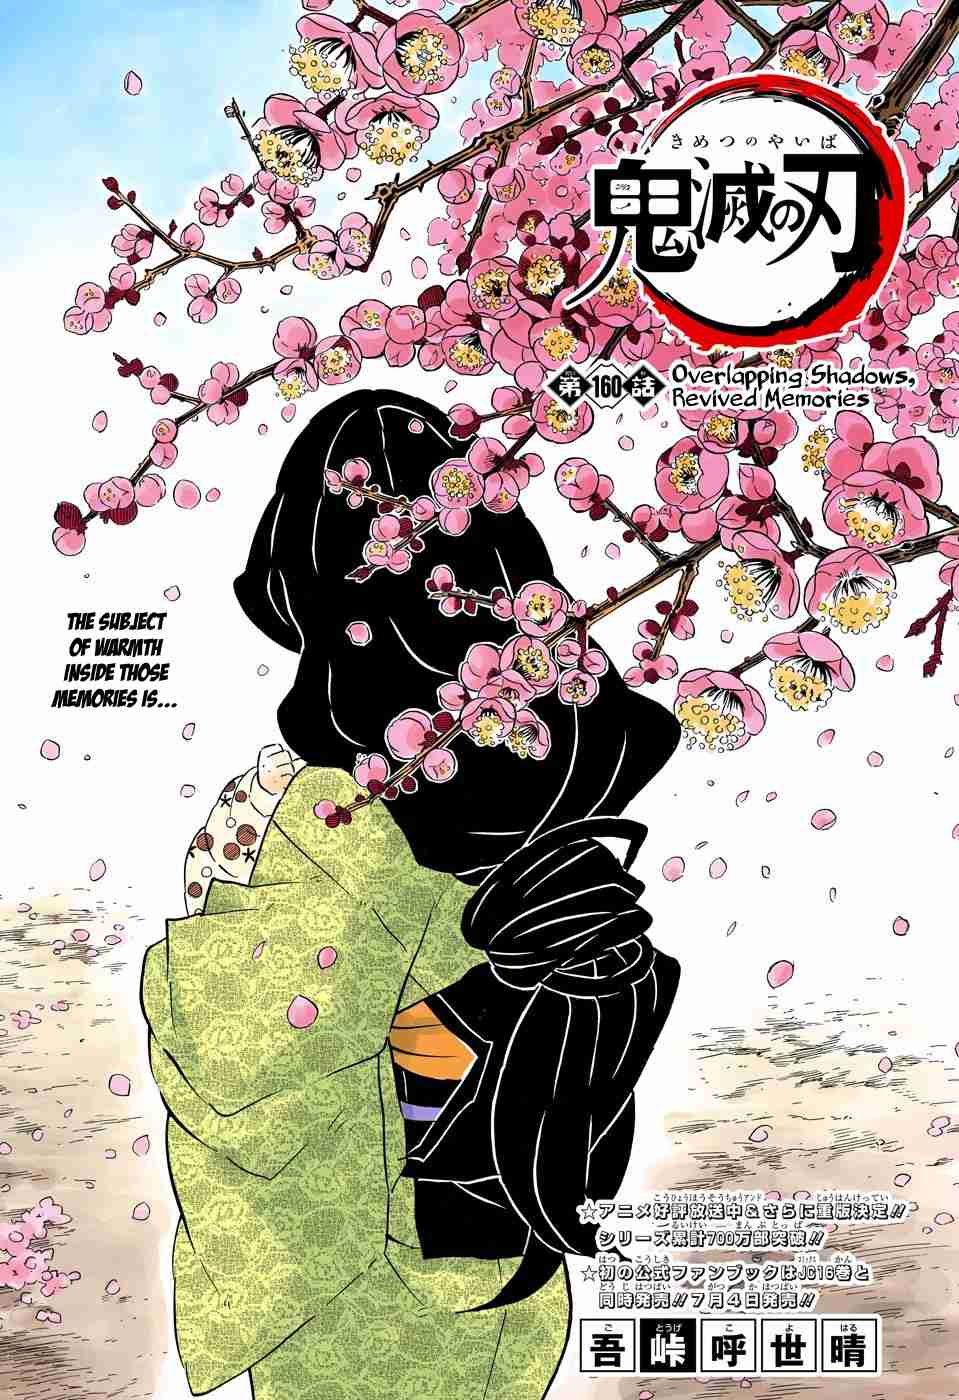 Kimetsu no Yaiba Digital Colored Comics Ch. 160 Overlapping Shadows, Revived Memories